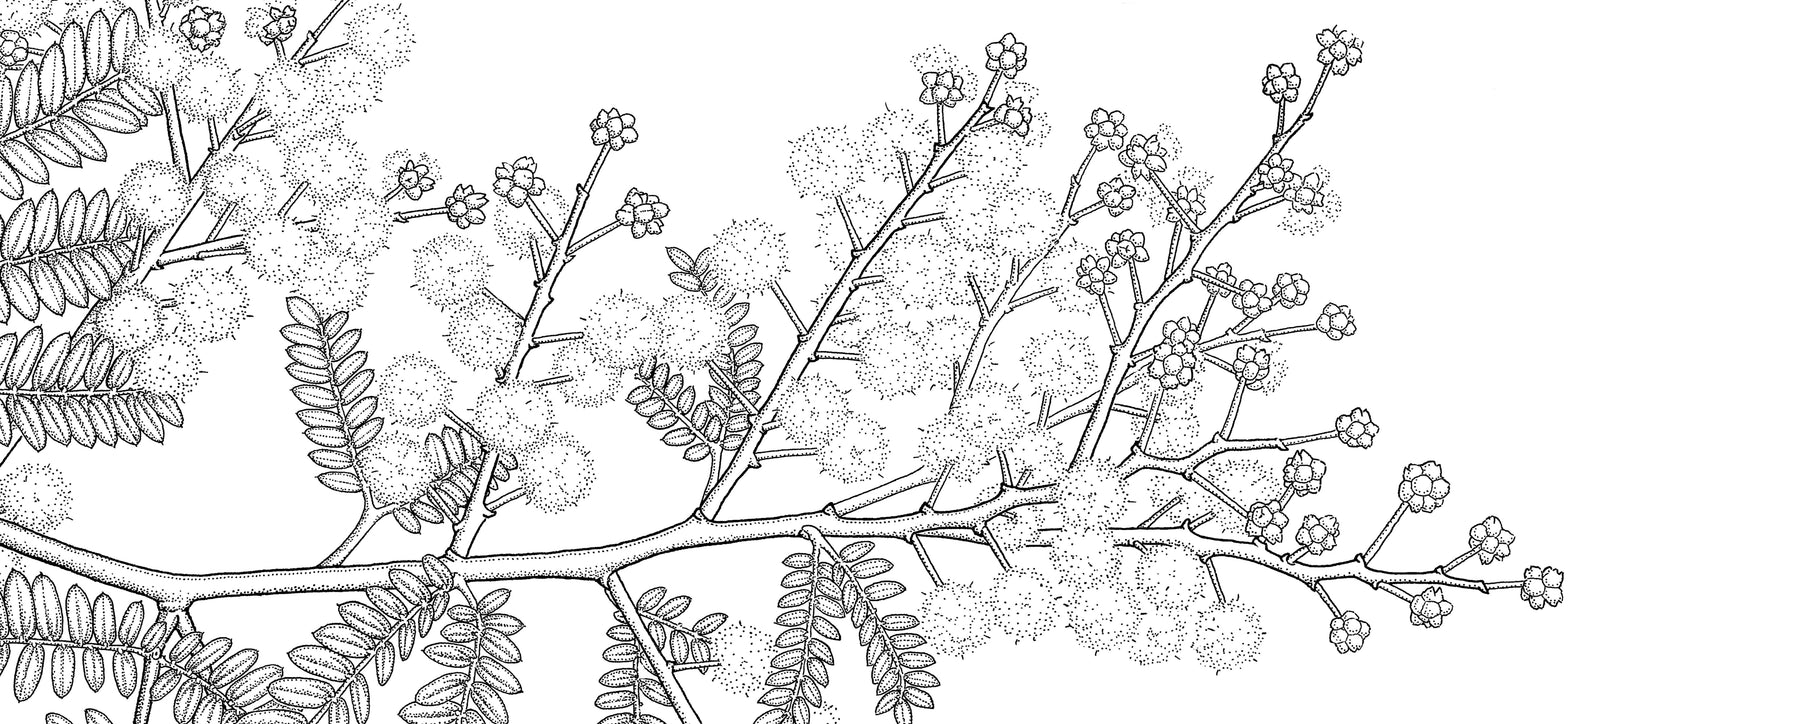 scientific illustration of wattle species in ink by Dr Anna Voytsekhovich